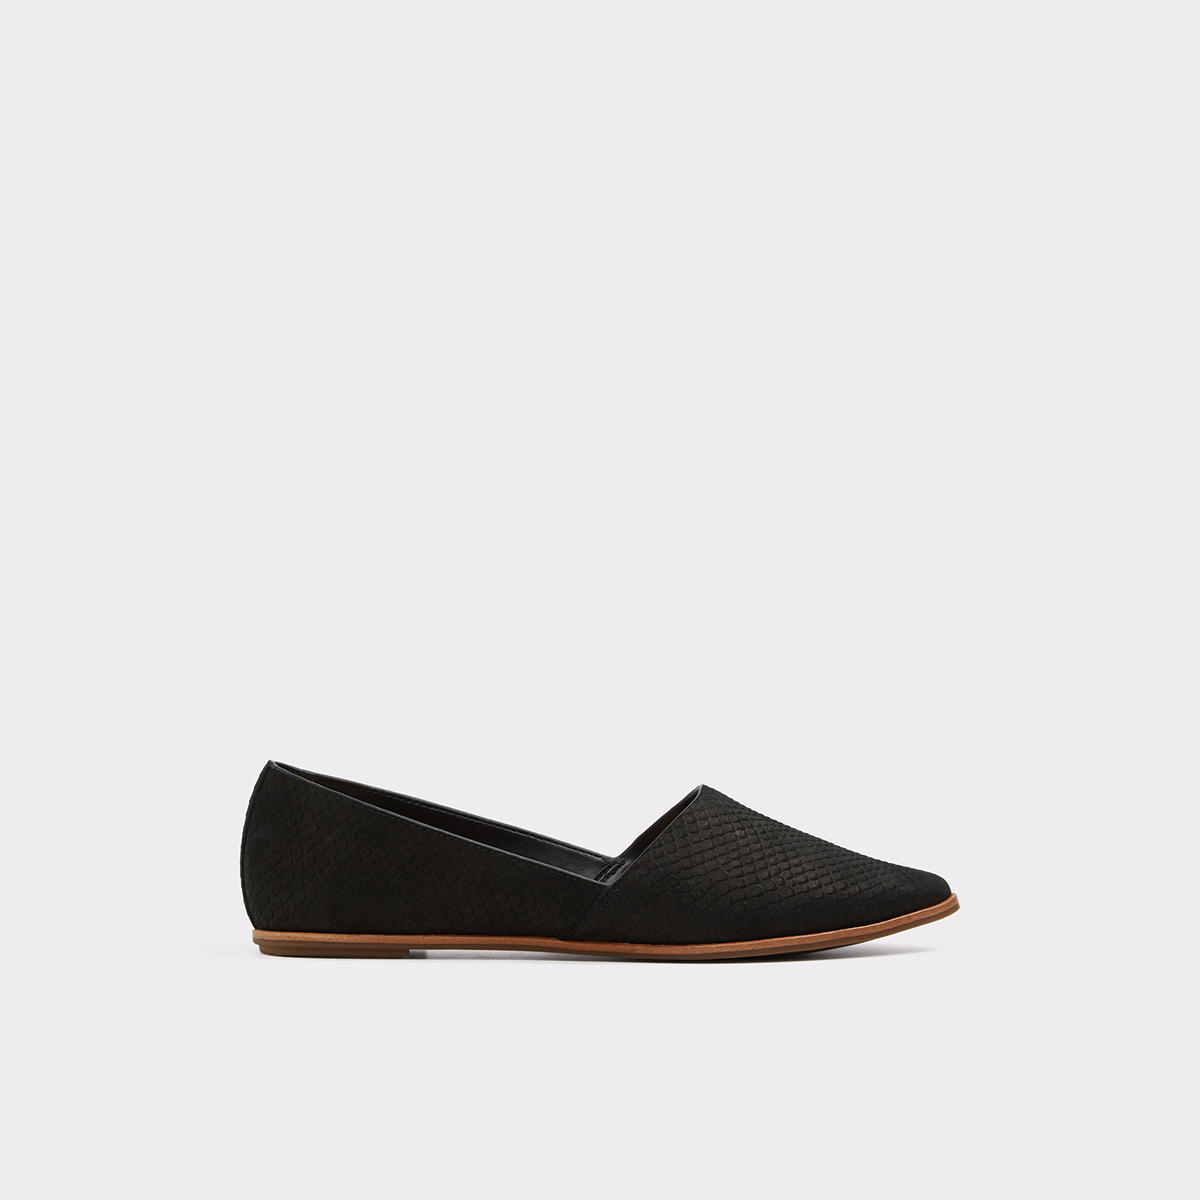 aldo blanchette black leather flat shoes